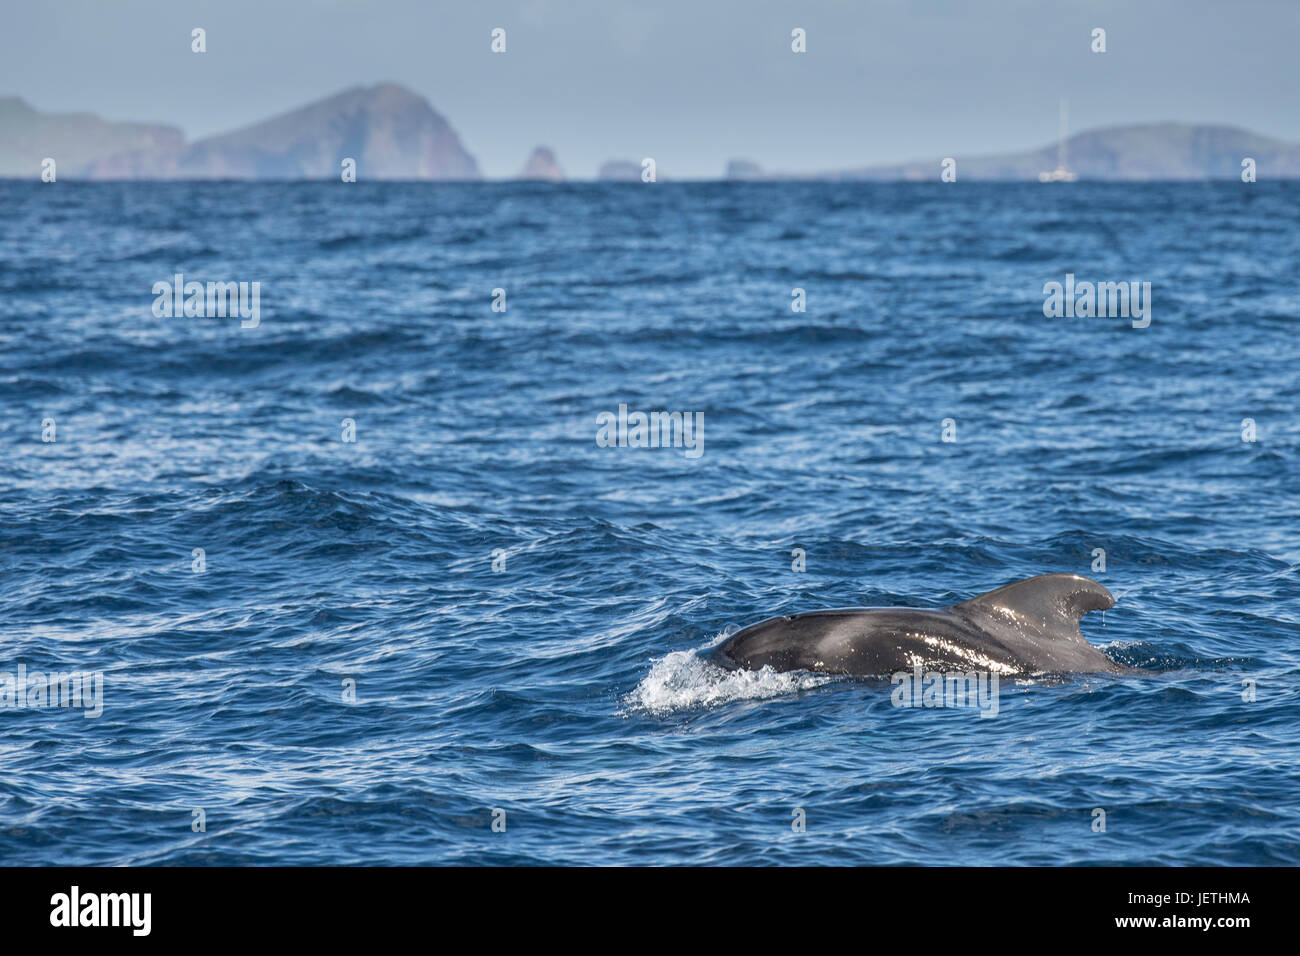 Short-finned pilot whale, Globicephala macrorhynchus, surfacing, showing dorsal fin, Island of Madeira, North Atlantic Ocean Stock Photo